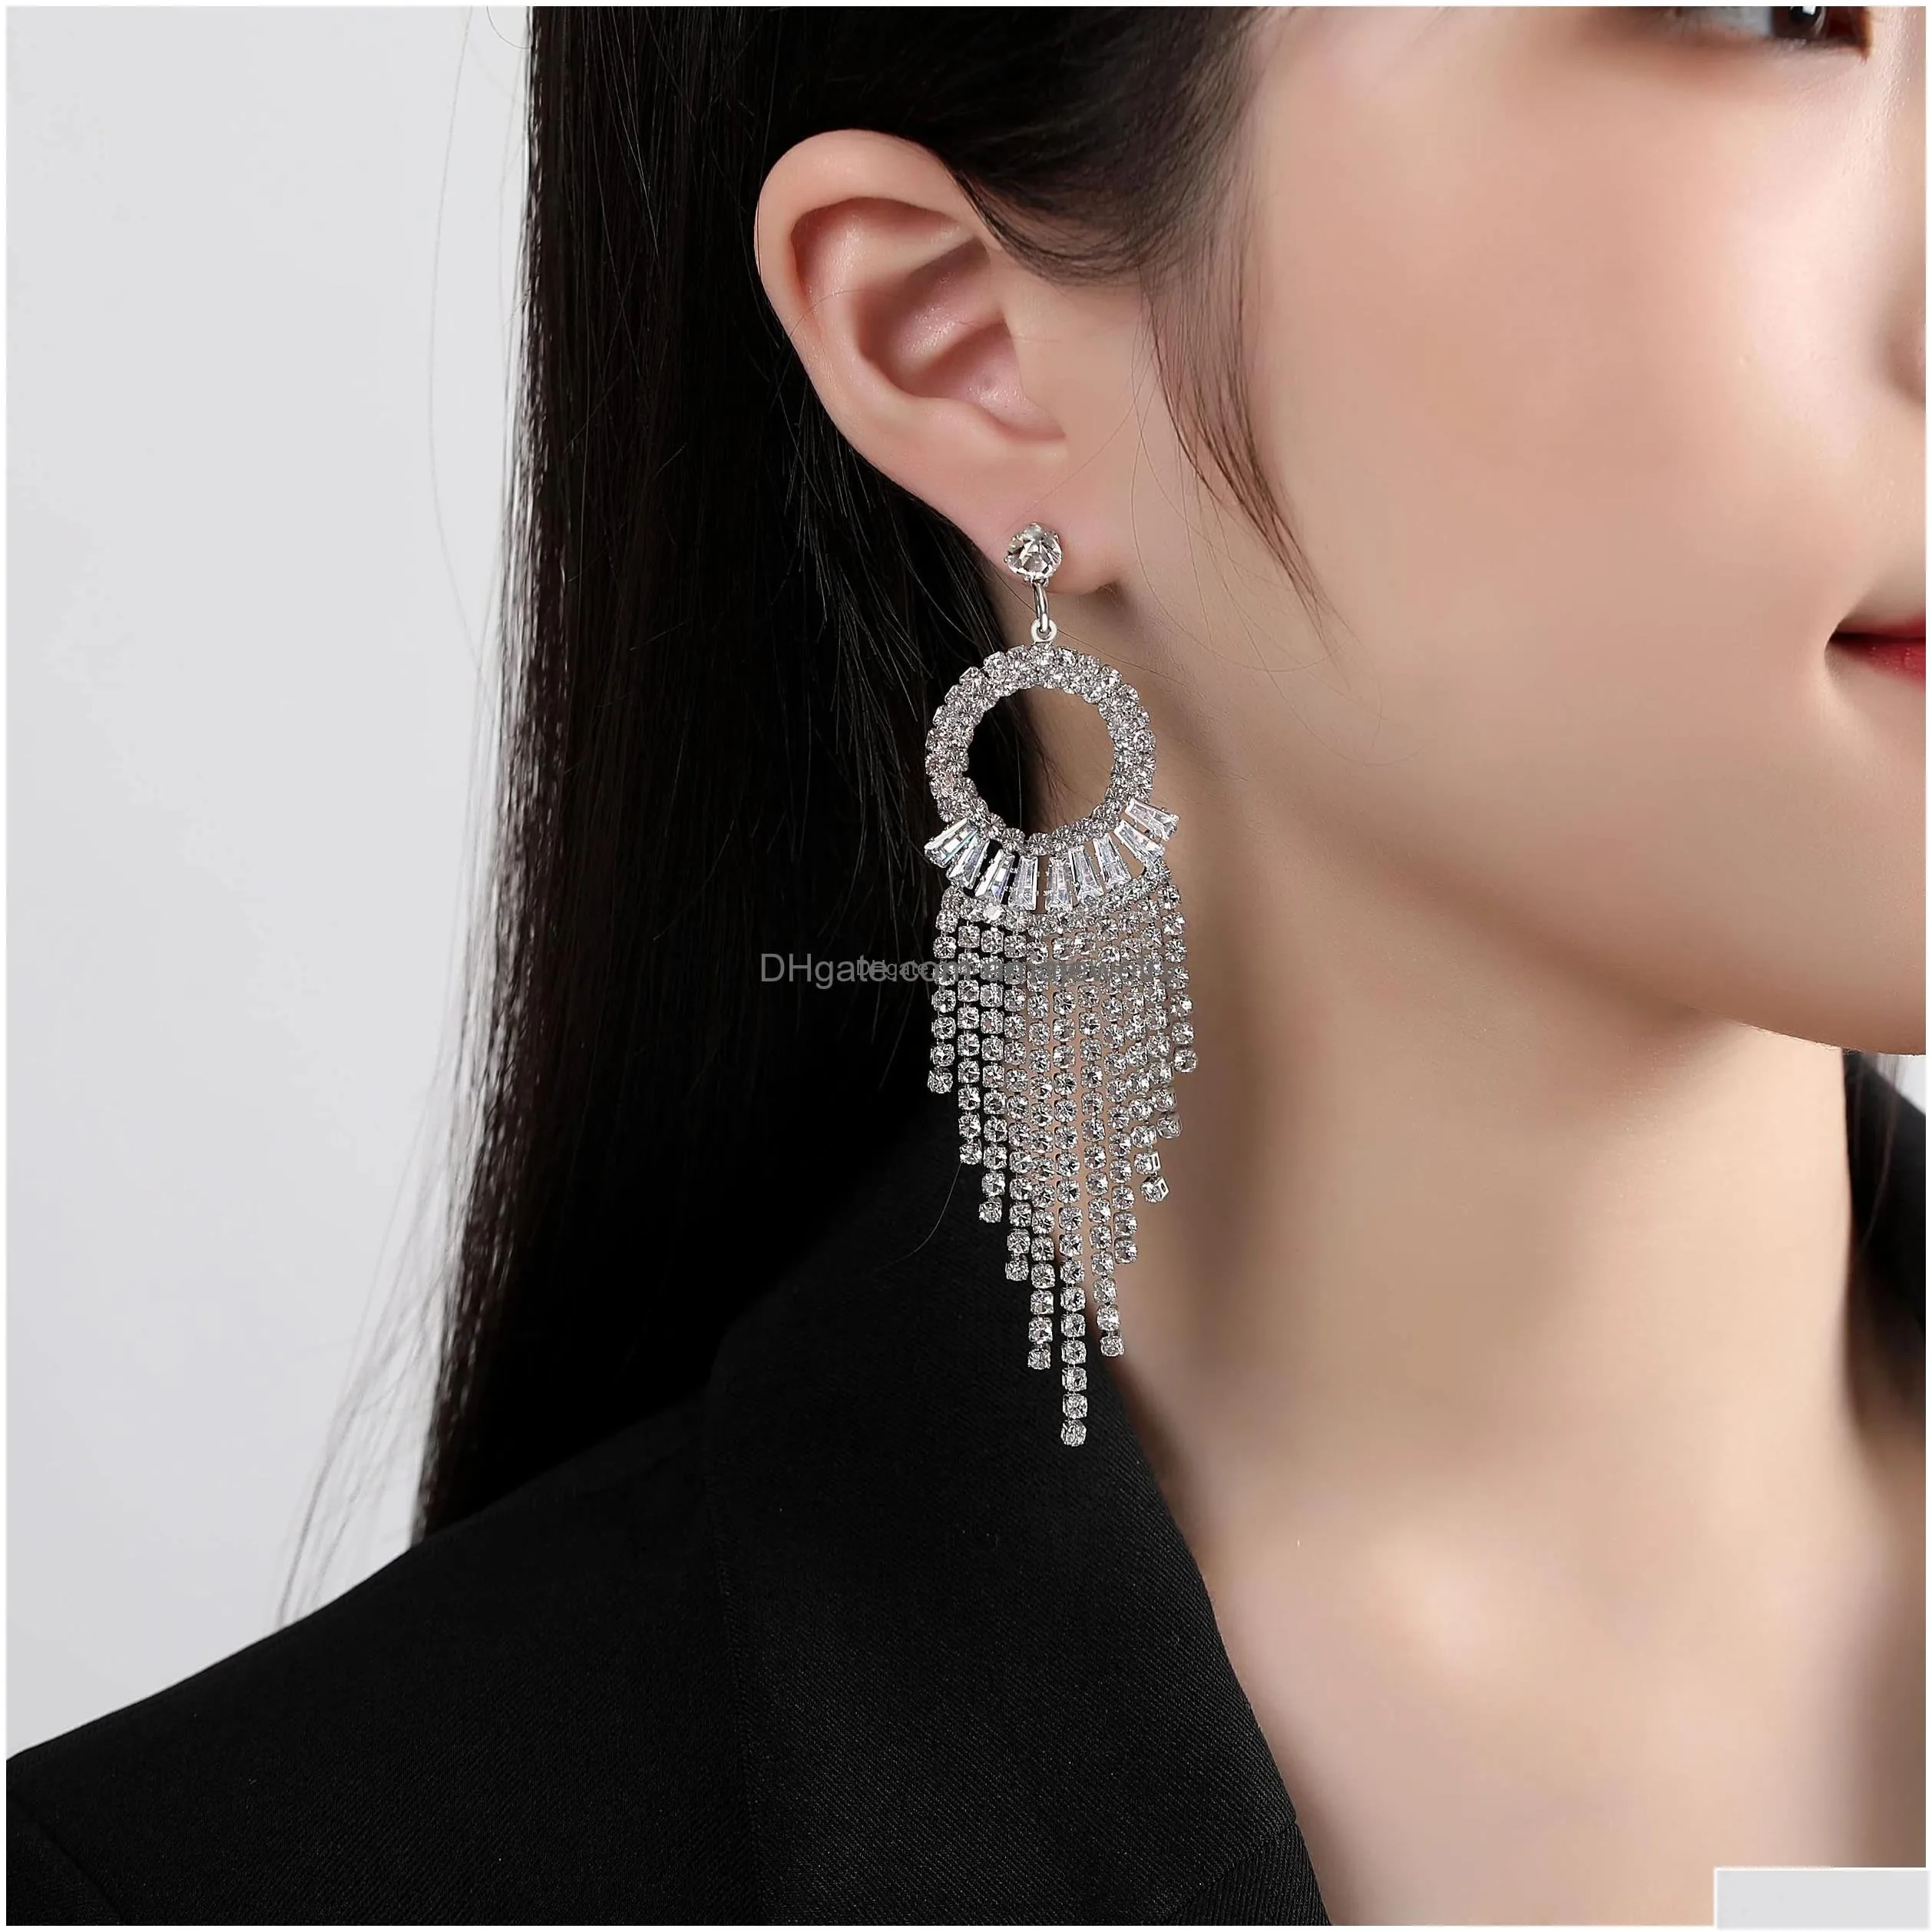 charm rhinestone earrings dangling tassel long sparkly sier prom party wedding for women ameby5466216